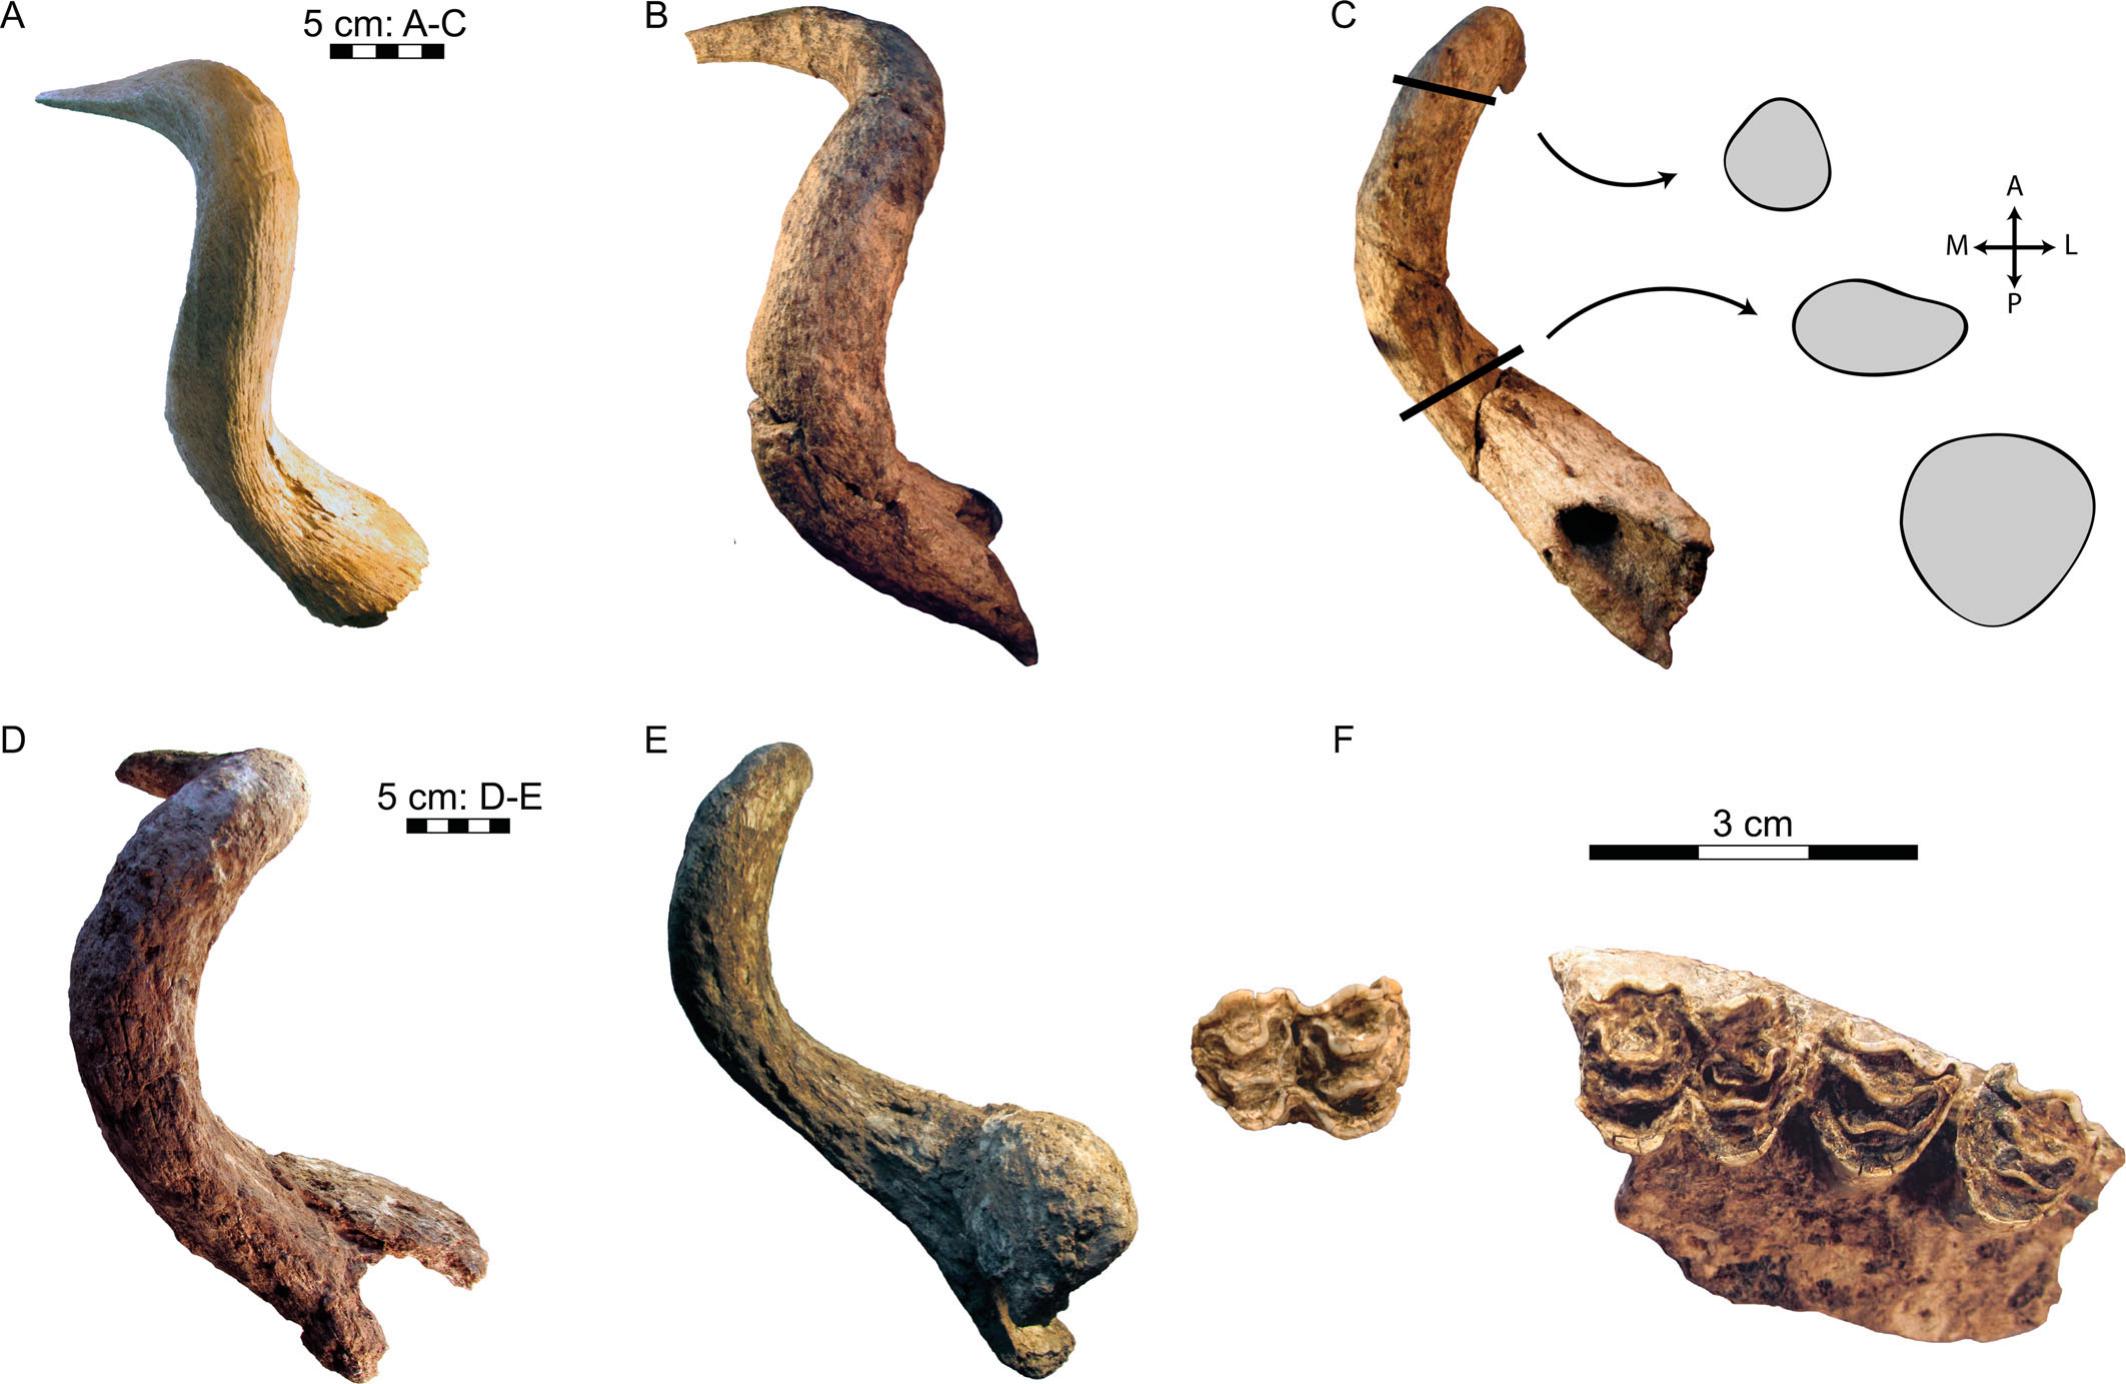 Late Pleistocene Mammals Kibogo, Kenya: Systematic Paleontology, Paleoenvironments, and Non-Analog Associations